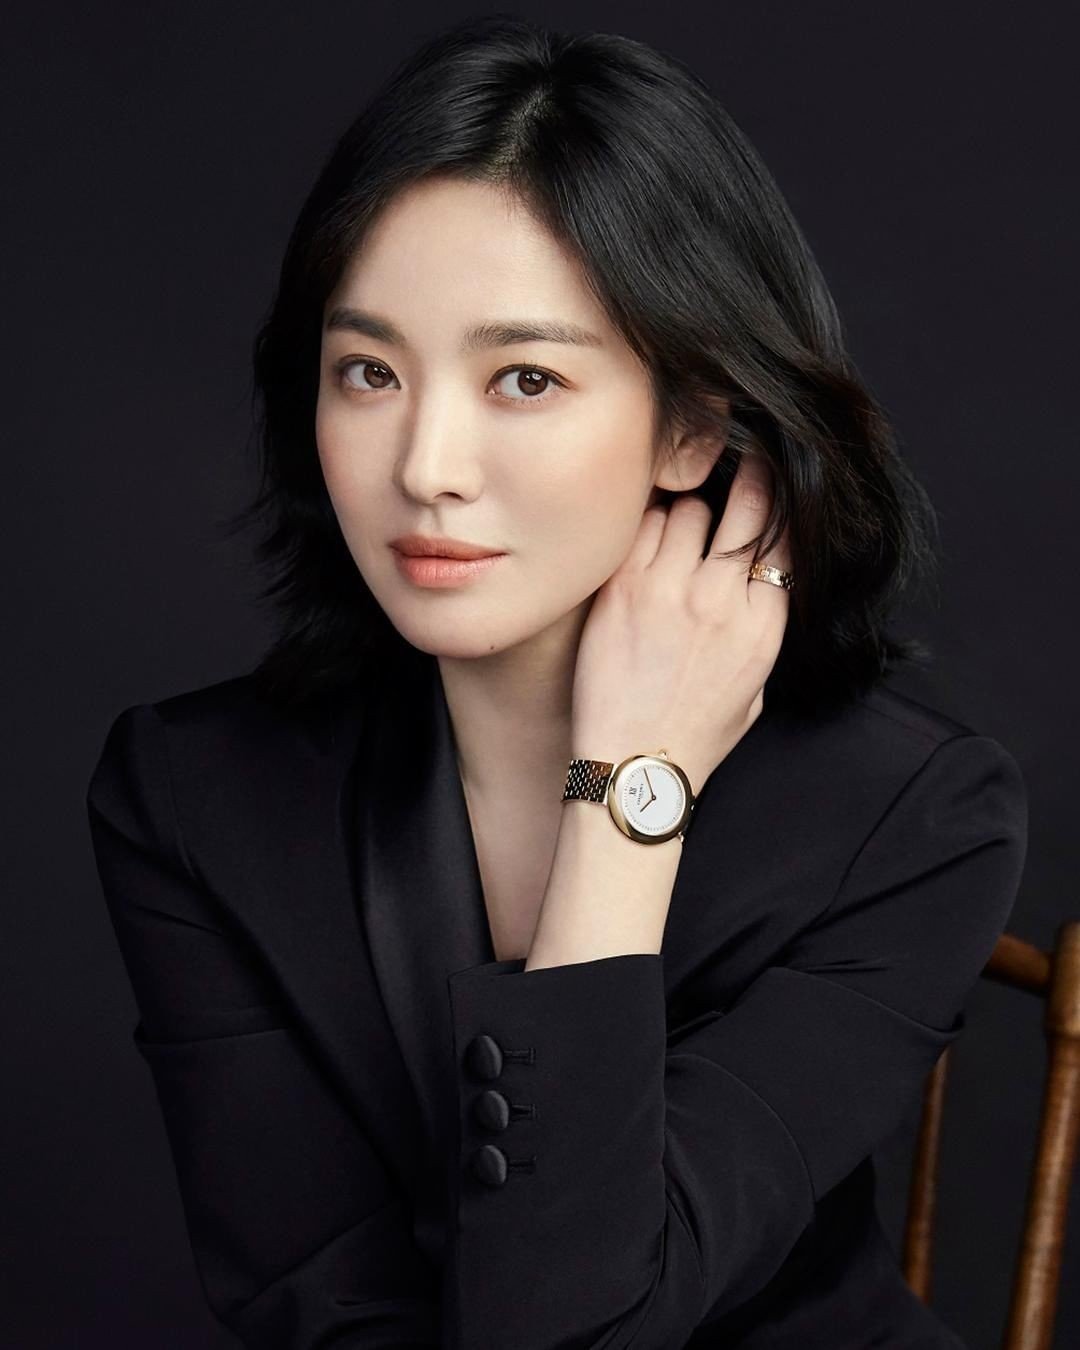 K-drama actress Song Hye-kyo is a fan of the Bolero watch. Photo: Chaumet